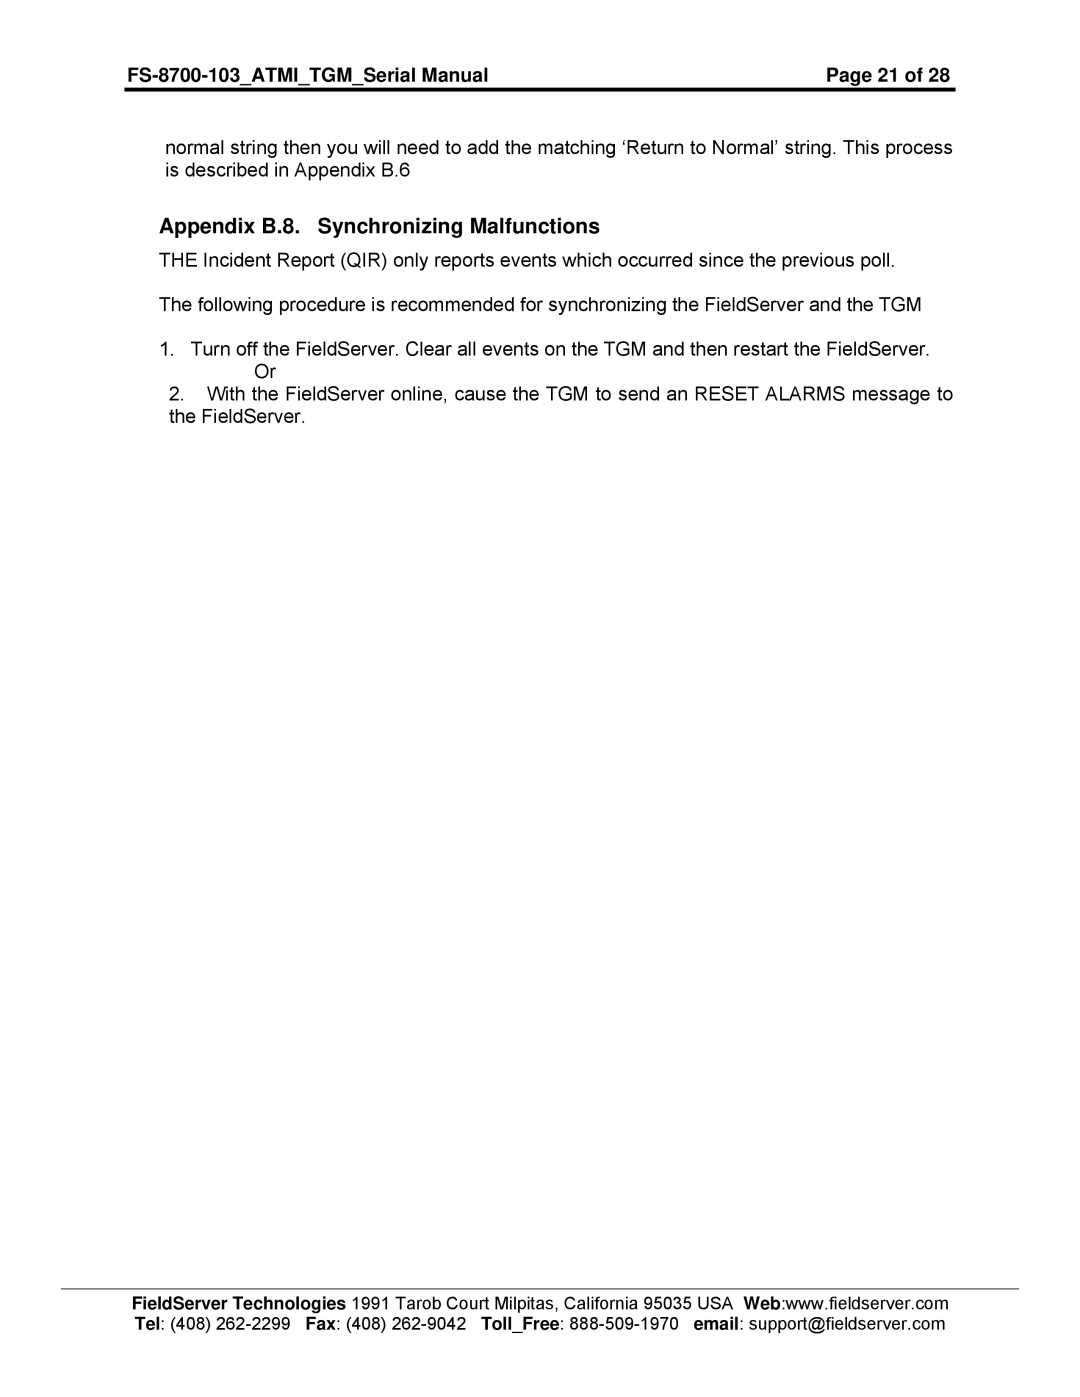 FieldServer FS-8700-103 instruction manual Appendix B.8. Synchronizing Malfunctions 